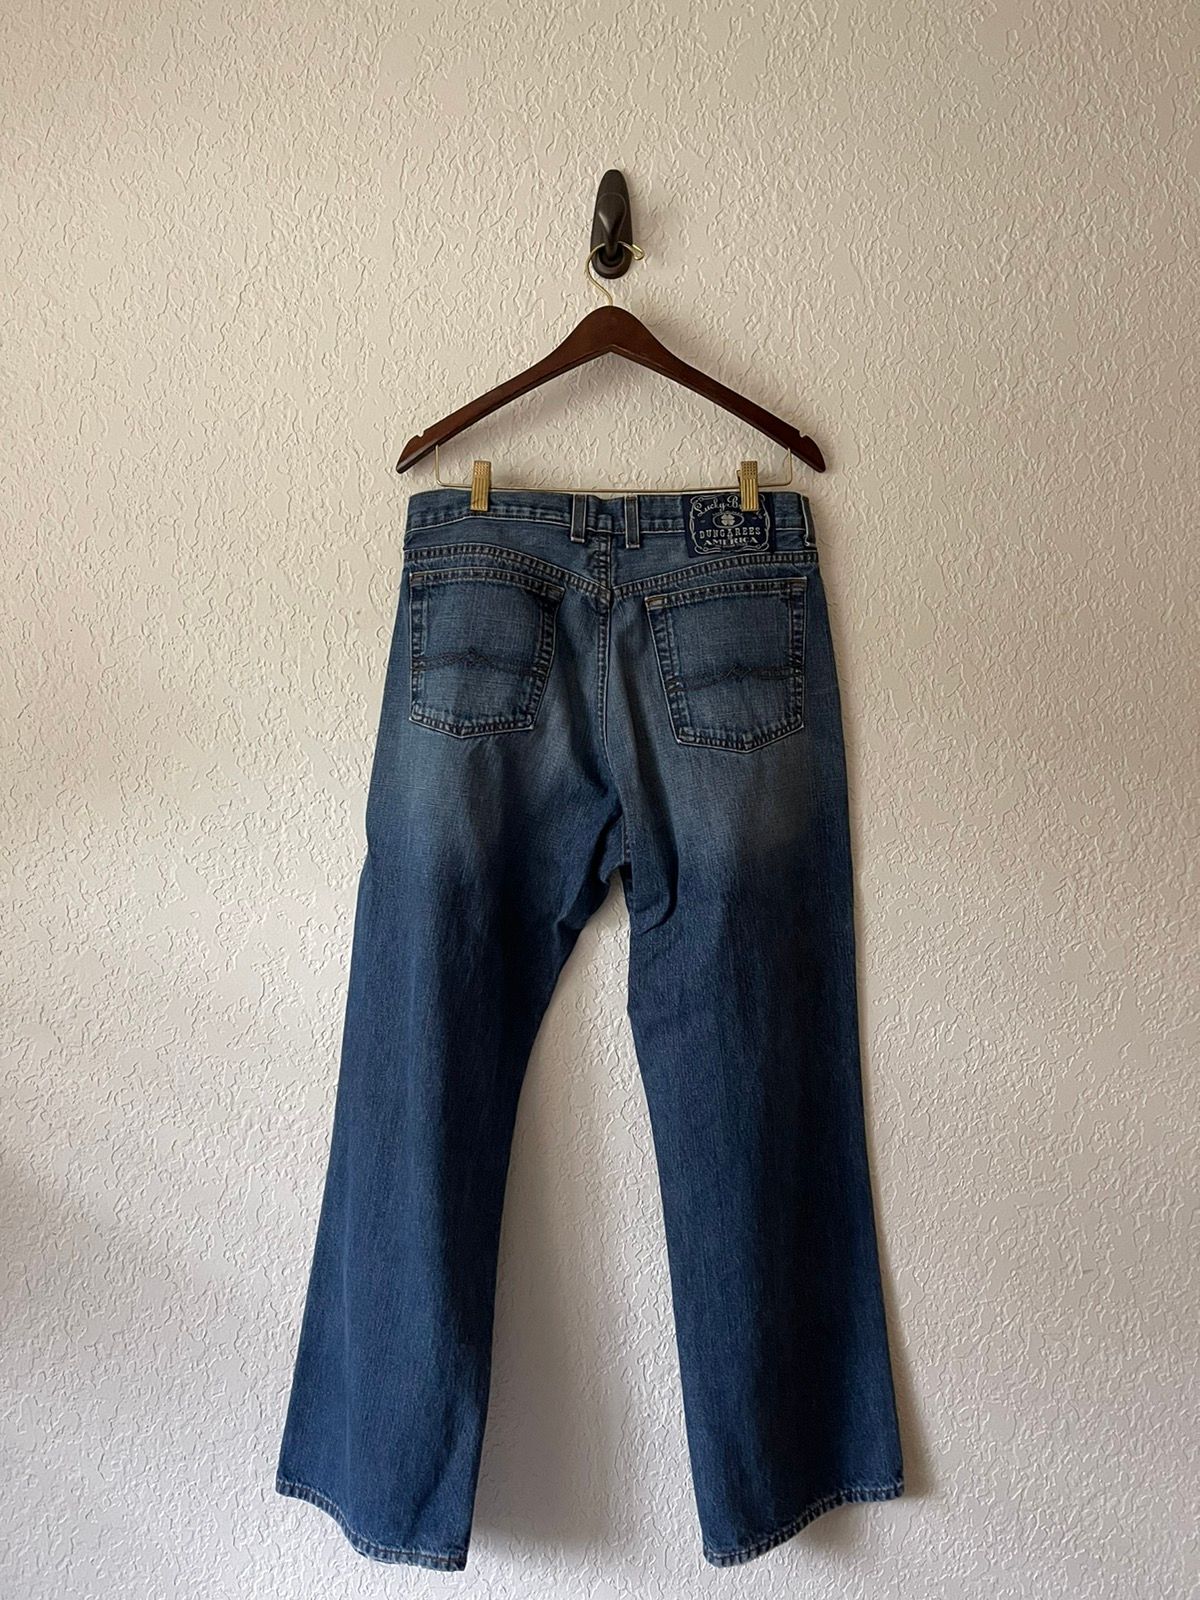 Vintage Lucky Brand Vintage Dungarees Denim Jeans Size US 34 / EU 50 - 2 Preview